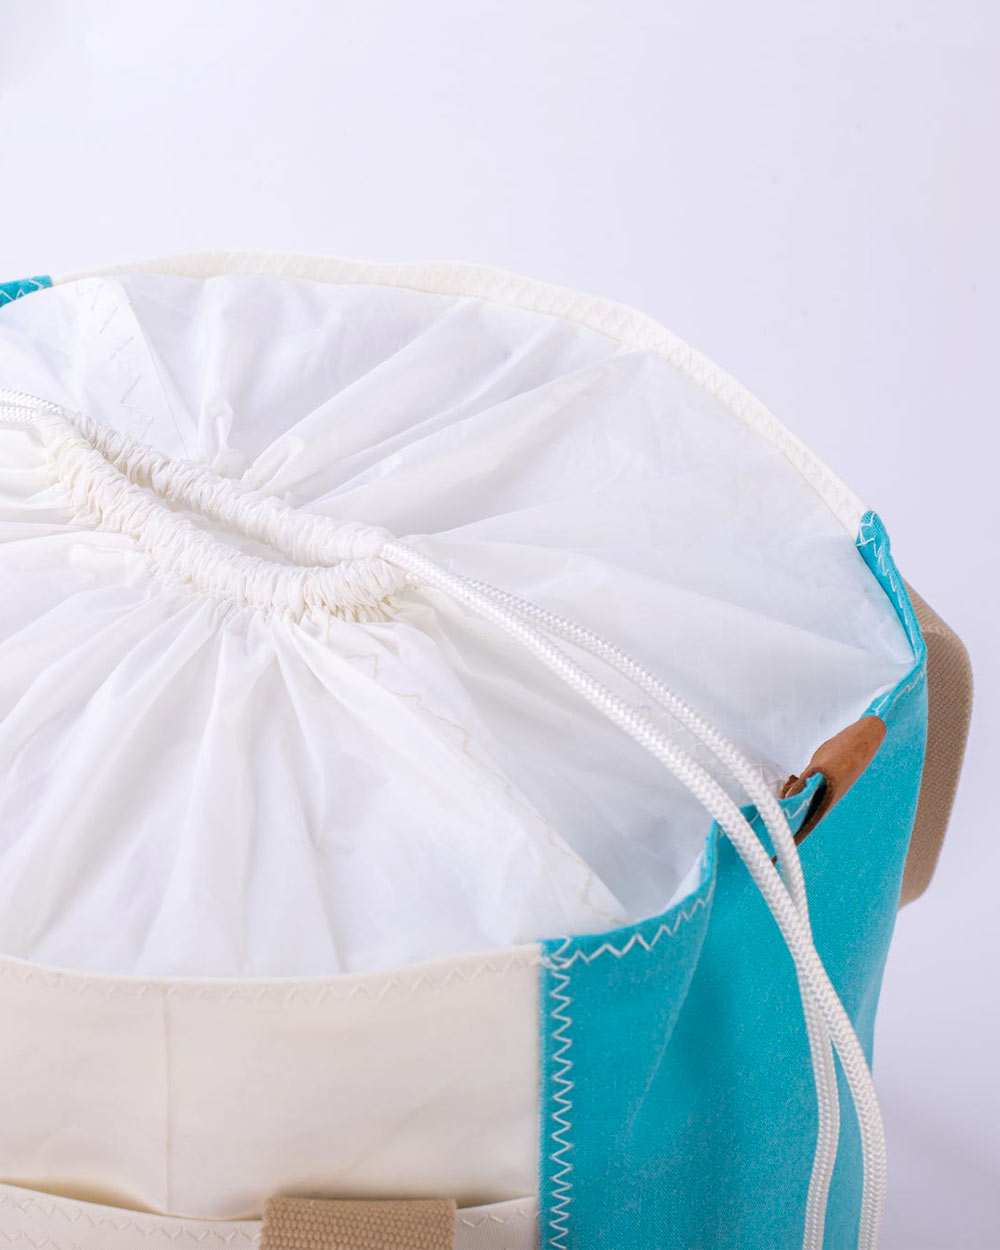 Damen Handtasche "Bucket Bag" by 727 Sailbags / Segeltuch weiß türkis / Boden Leinen